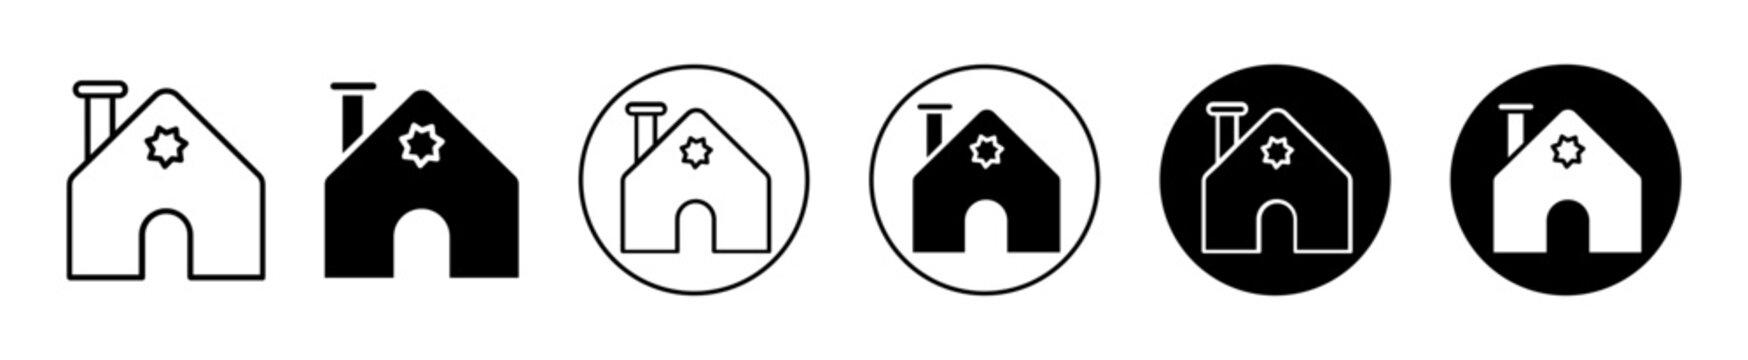 Shelter vector icon illustration set